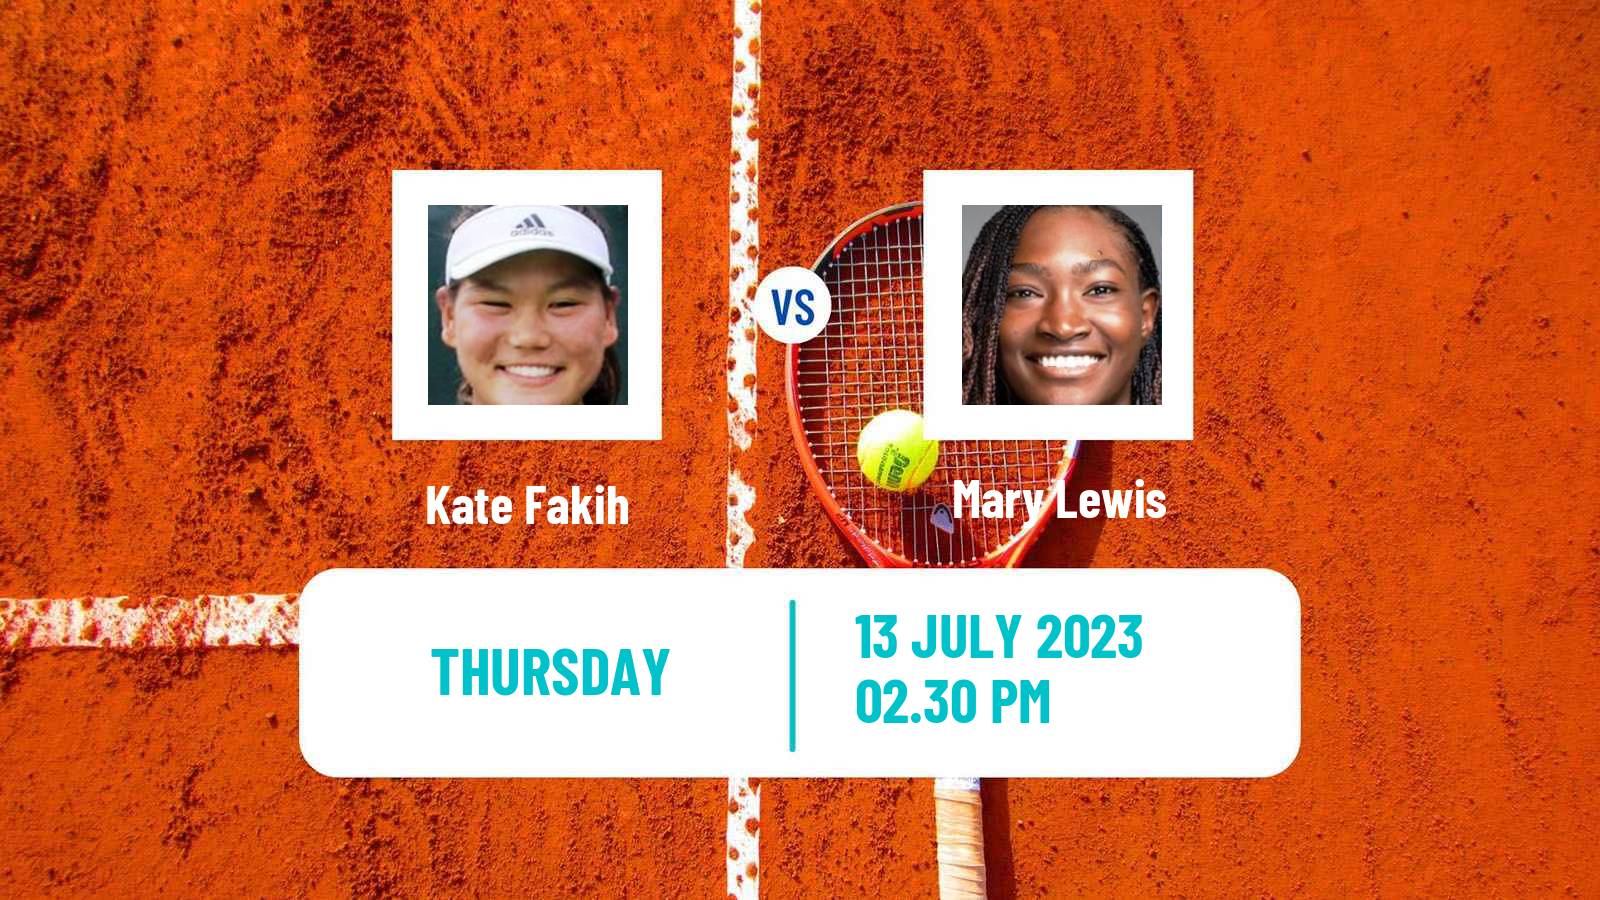 Tennis ITF W15 Lakewood Ca 2 Women Kate Fakih - Mary Lewis